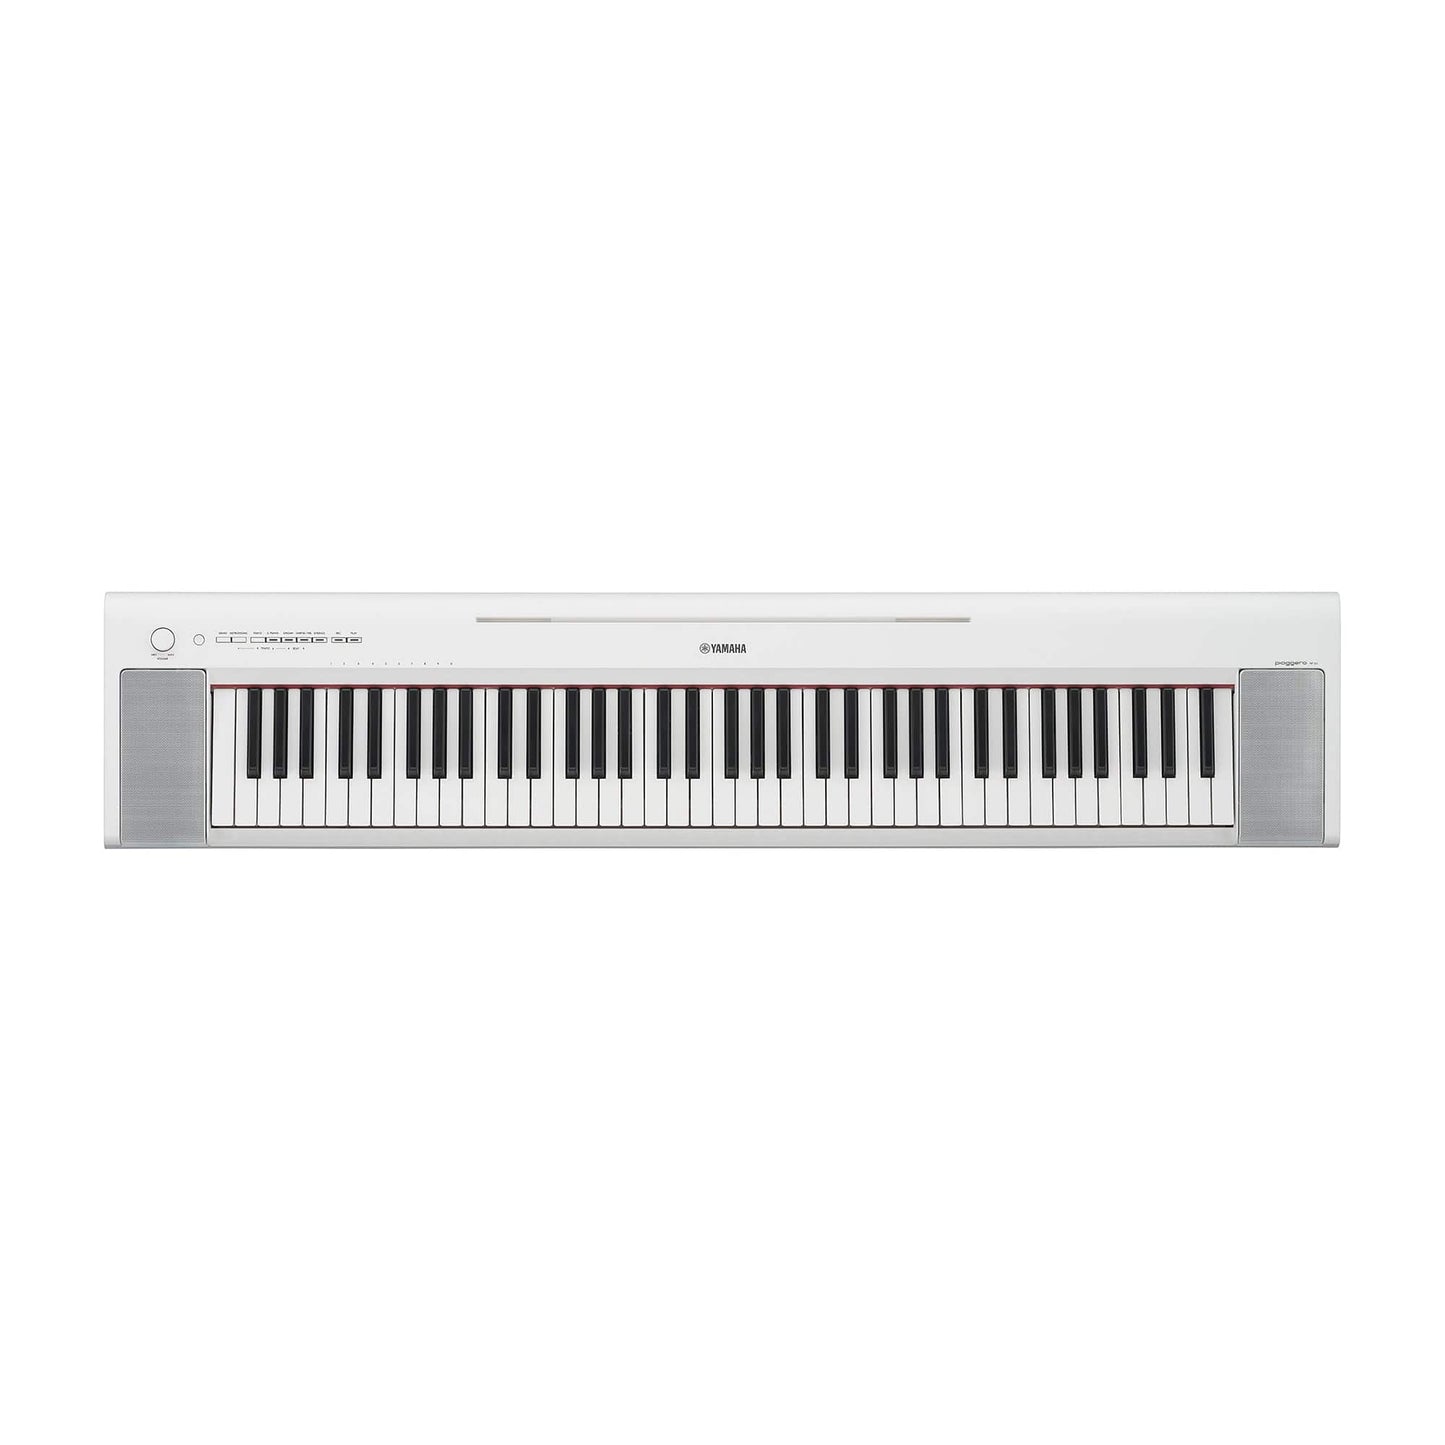 Yamaha Piaggero NP-35 76-key Ultra Portable Digital Piano White Keyboards and Synths / Electric Pianos